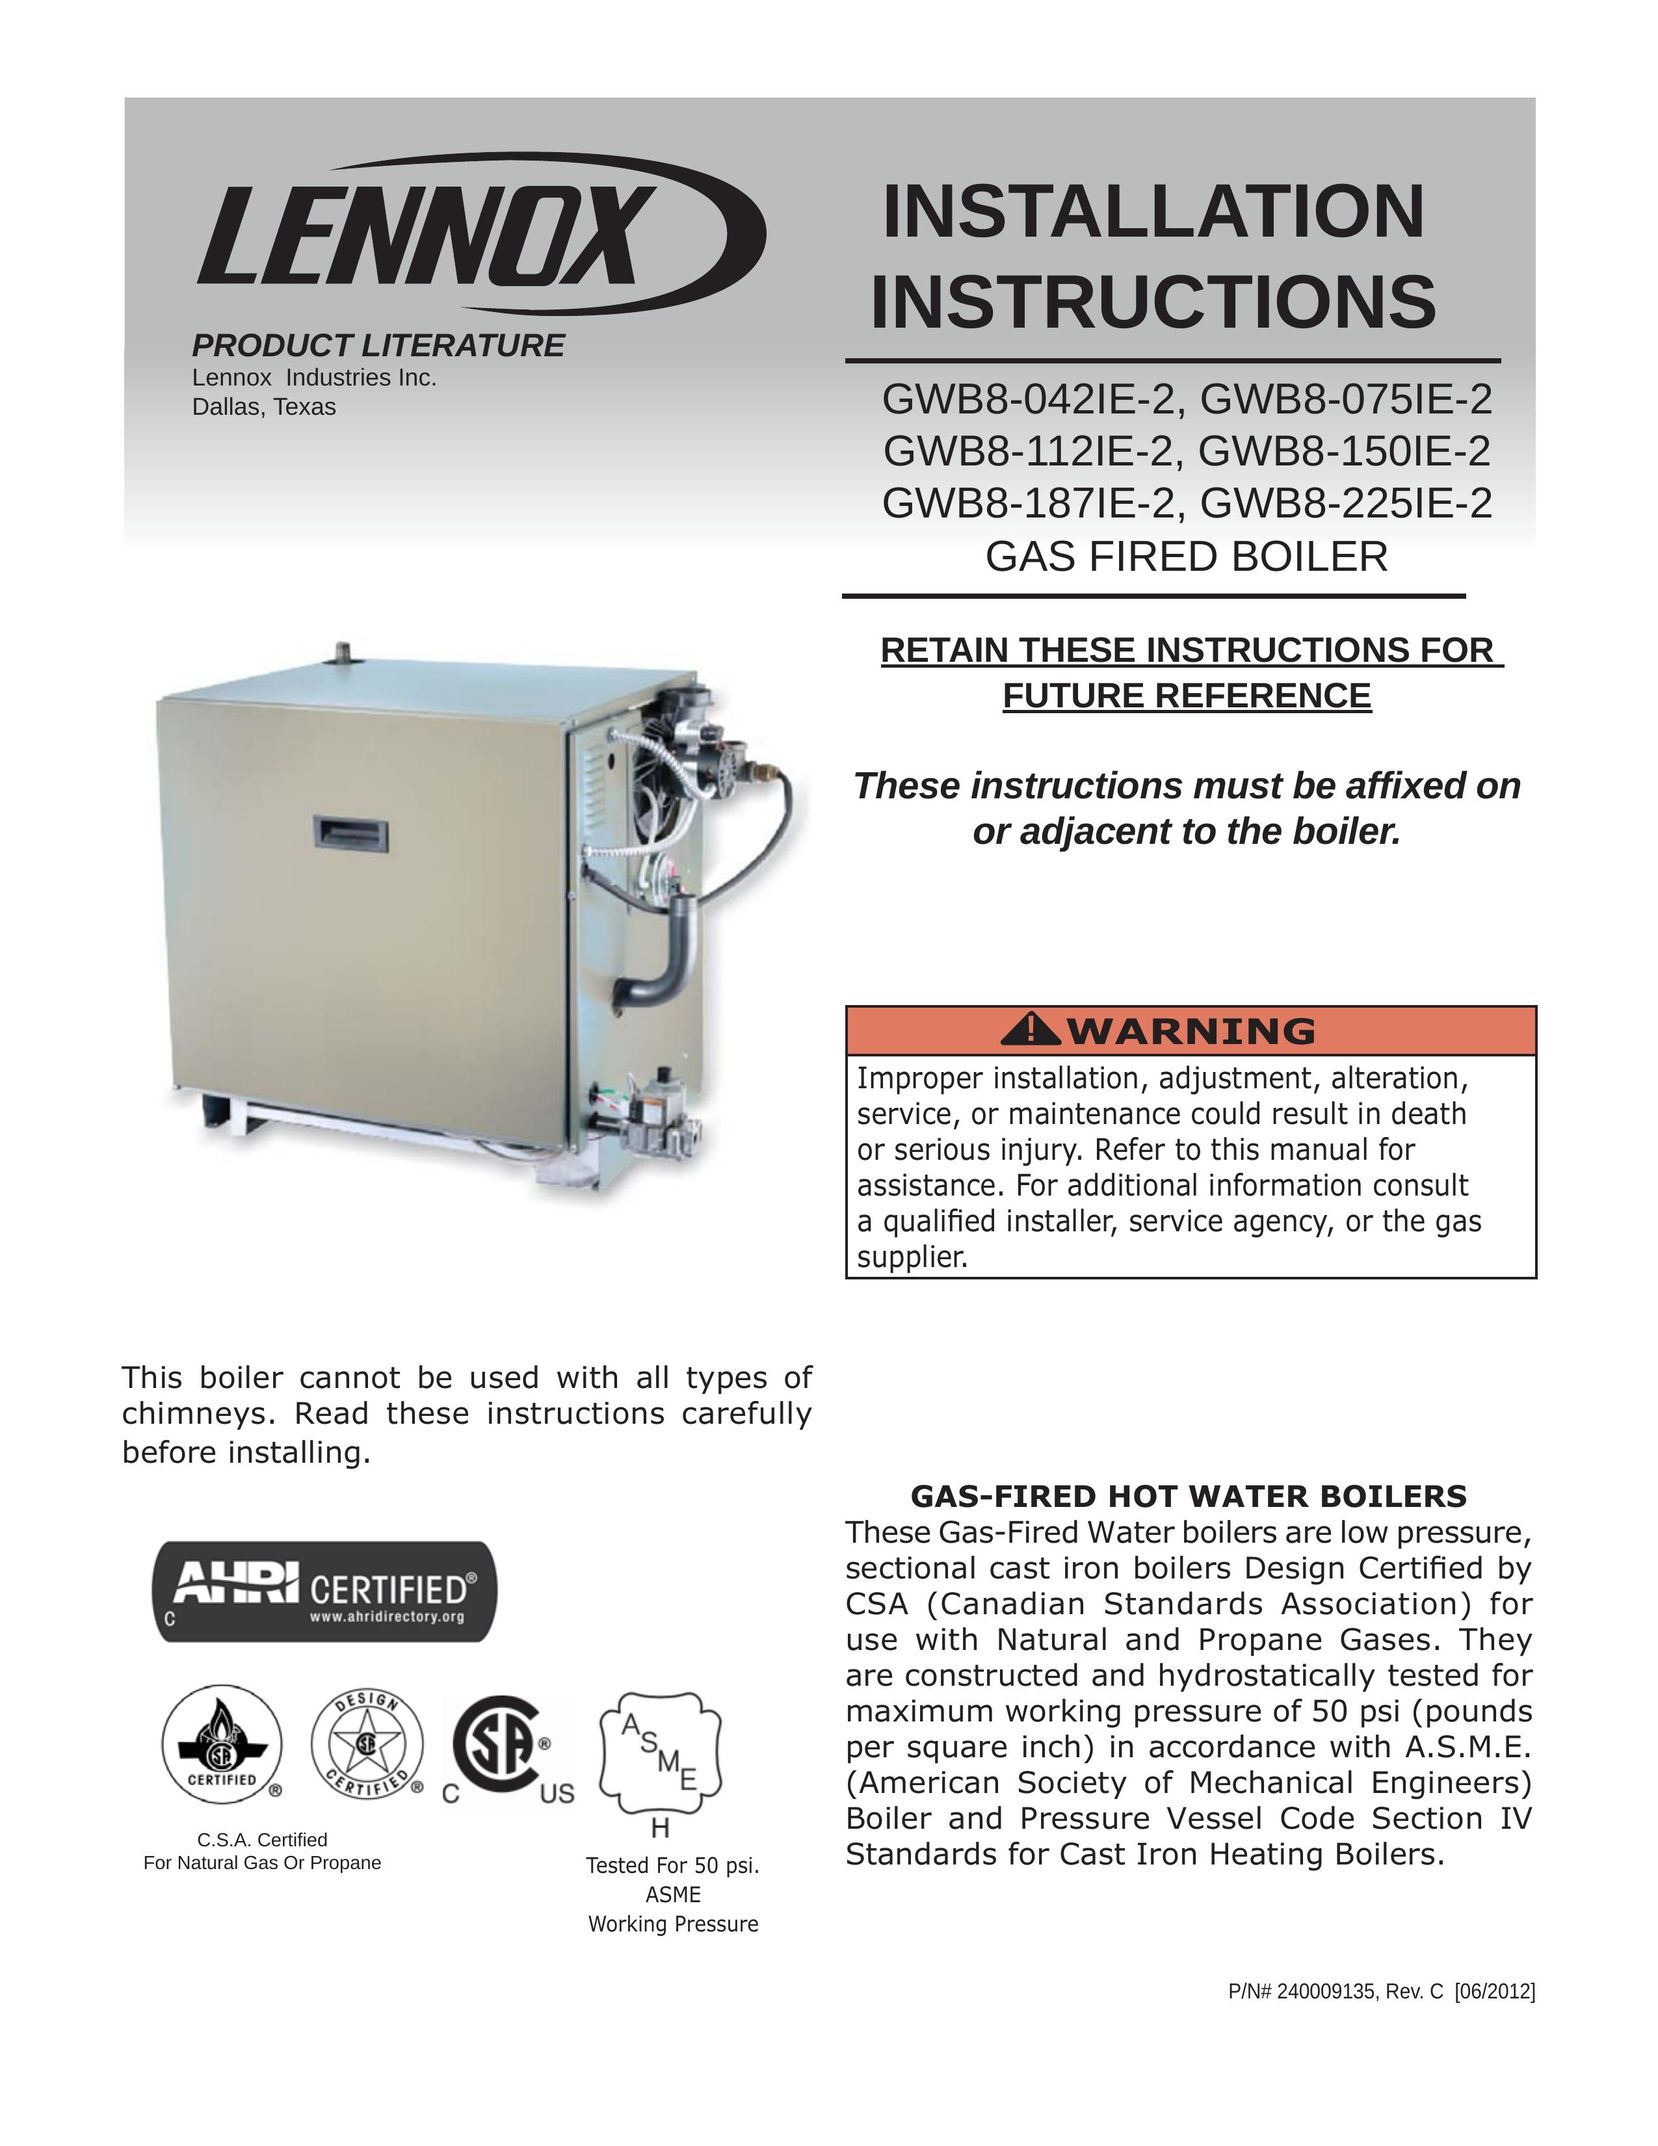 Lennox International Inc. GWB8-150IE-2 Oven User Manual